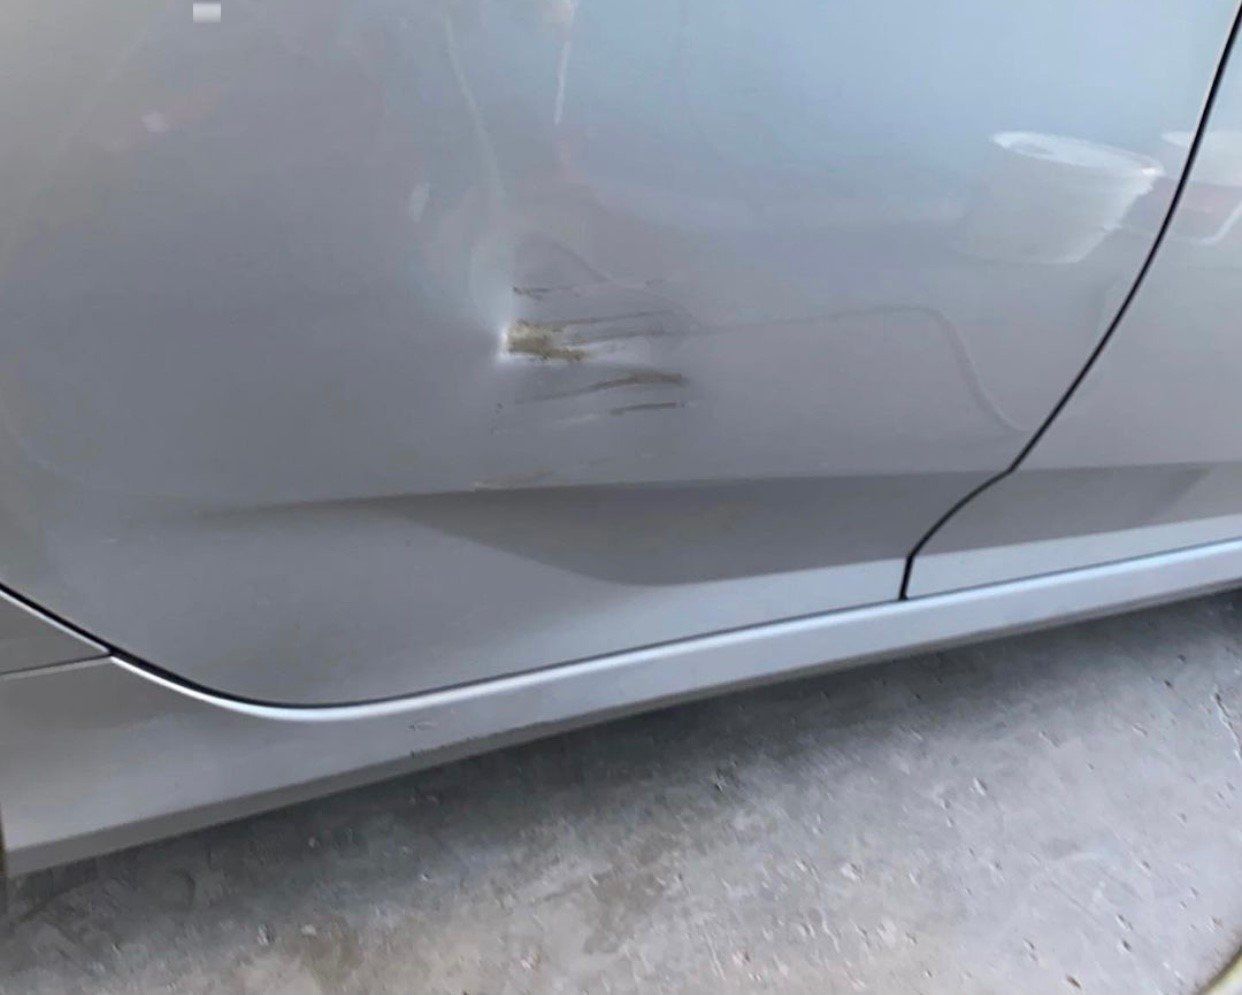 3rd Kind Customz vehicle collision damage 1